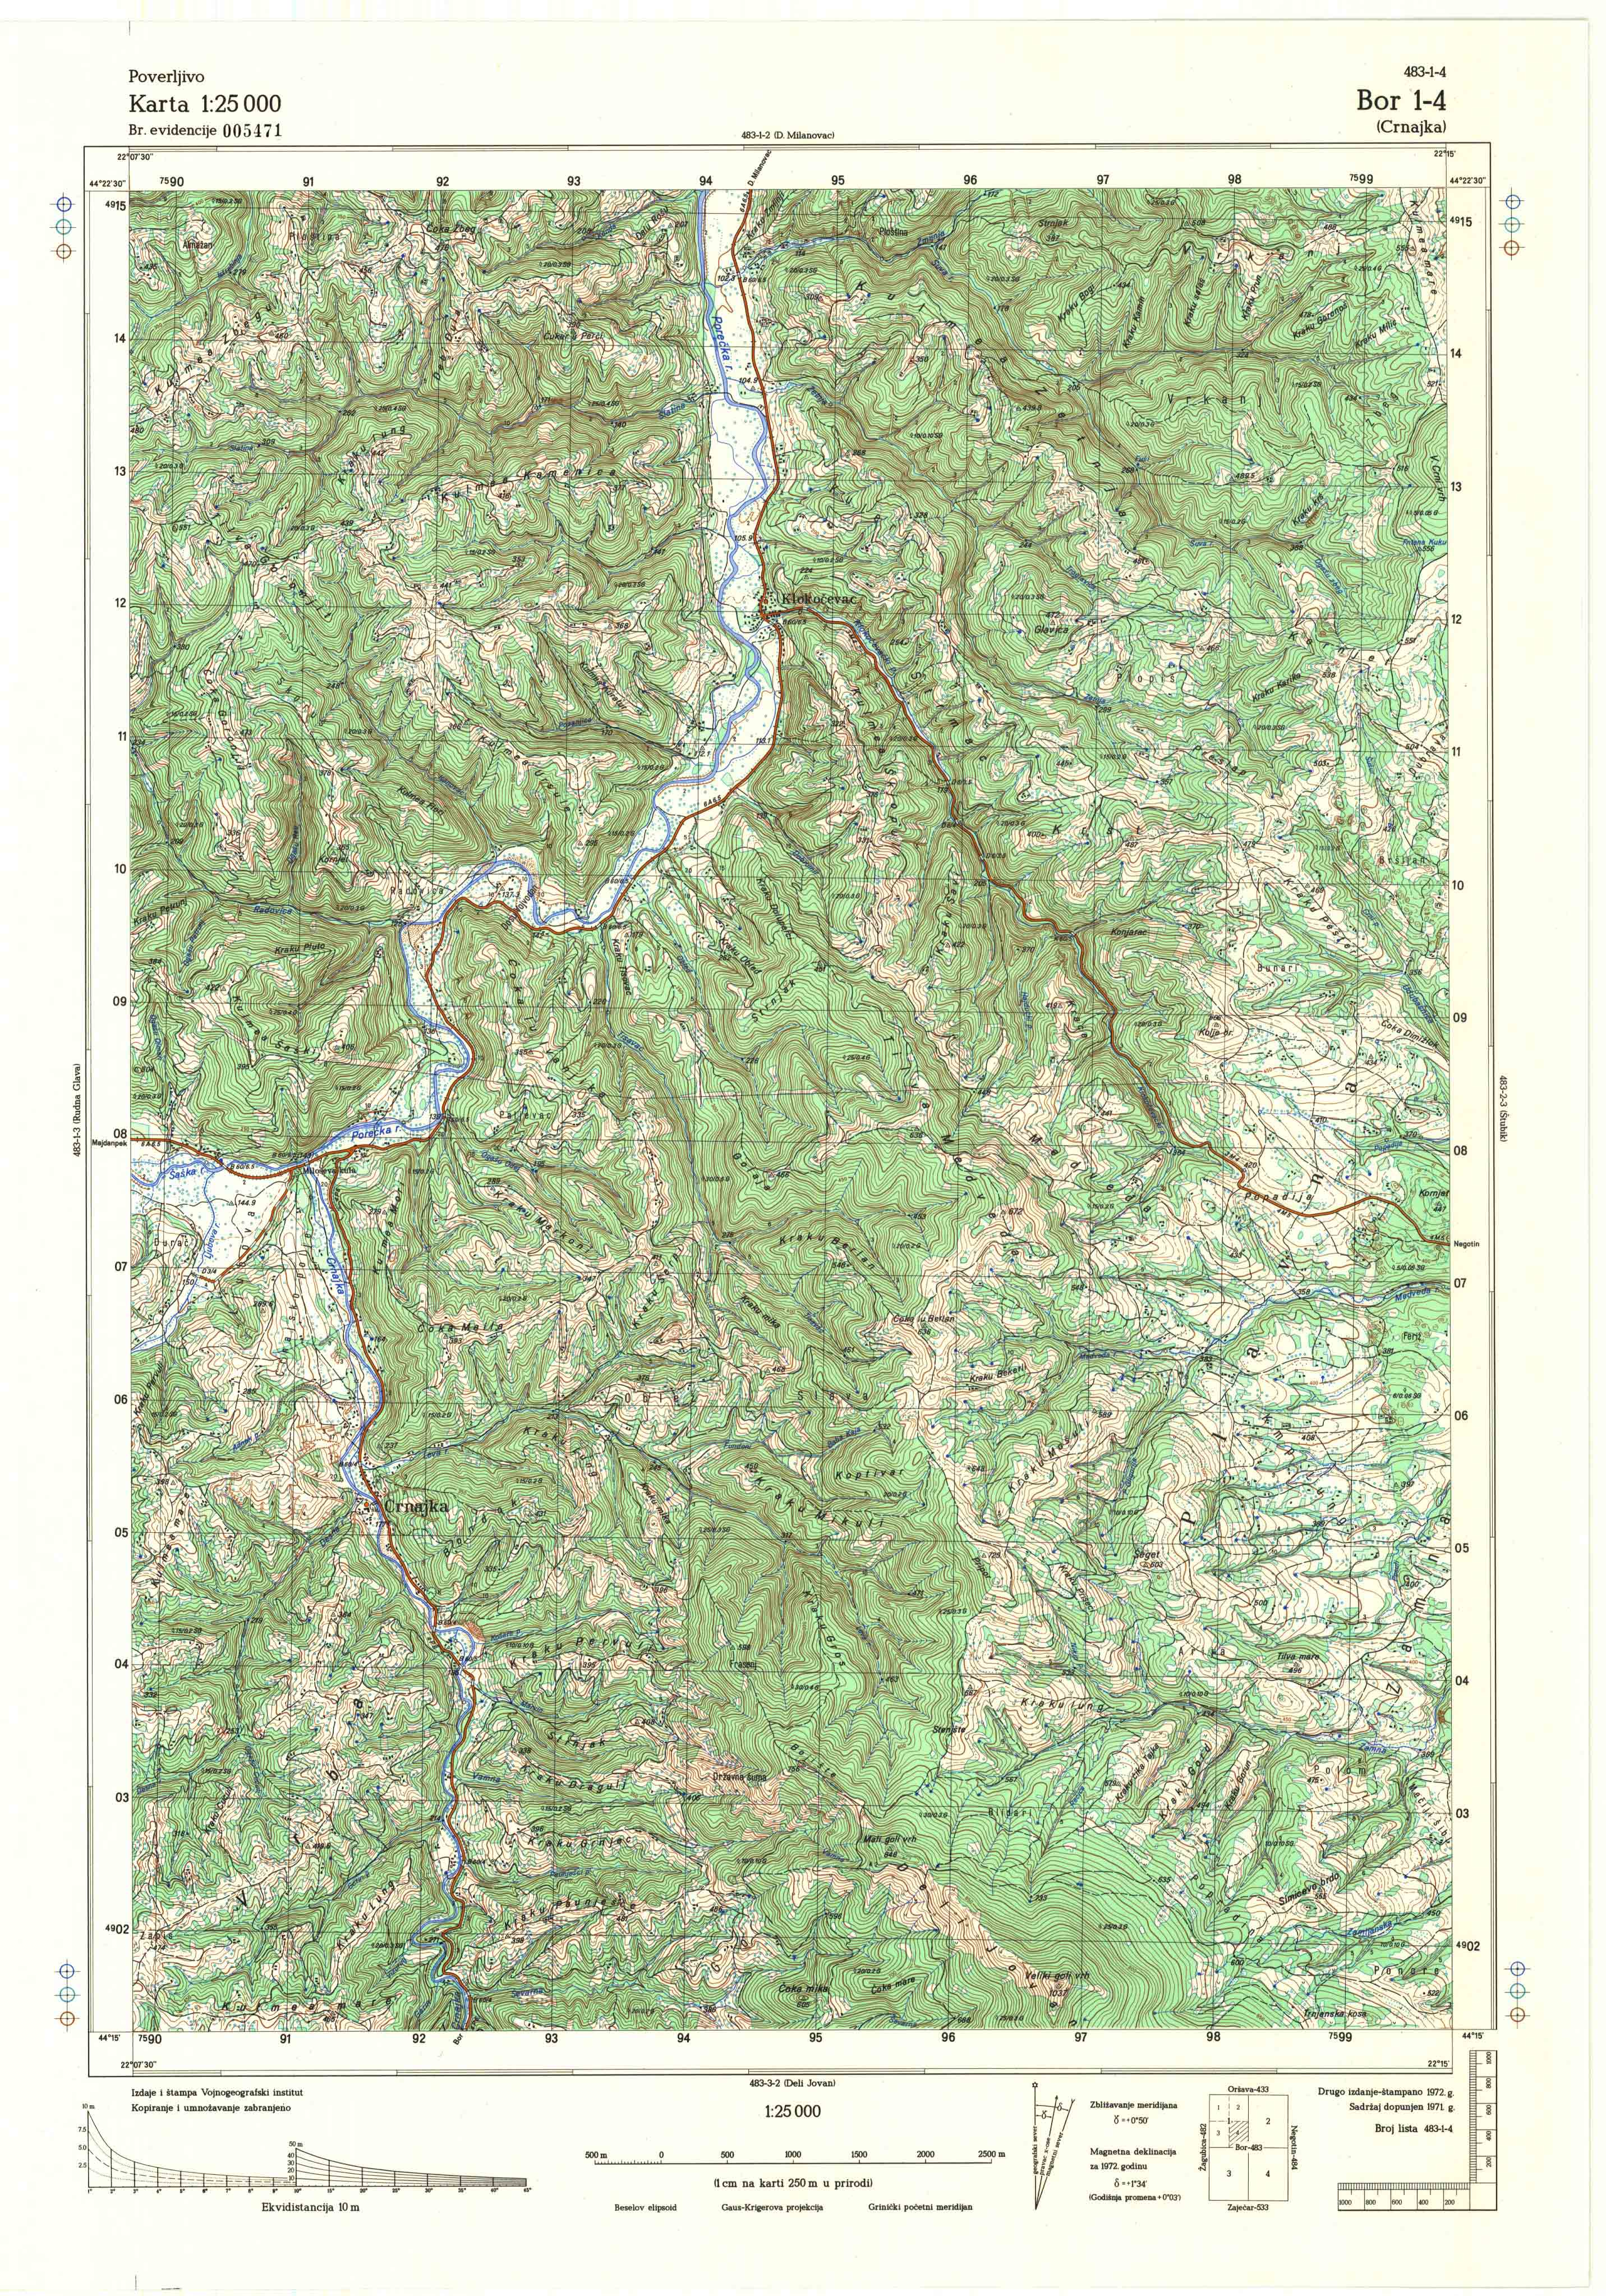  topografska karta srbije 25000 JNA  Bor